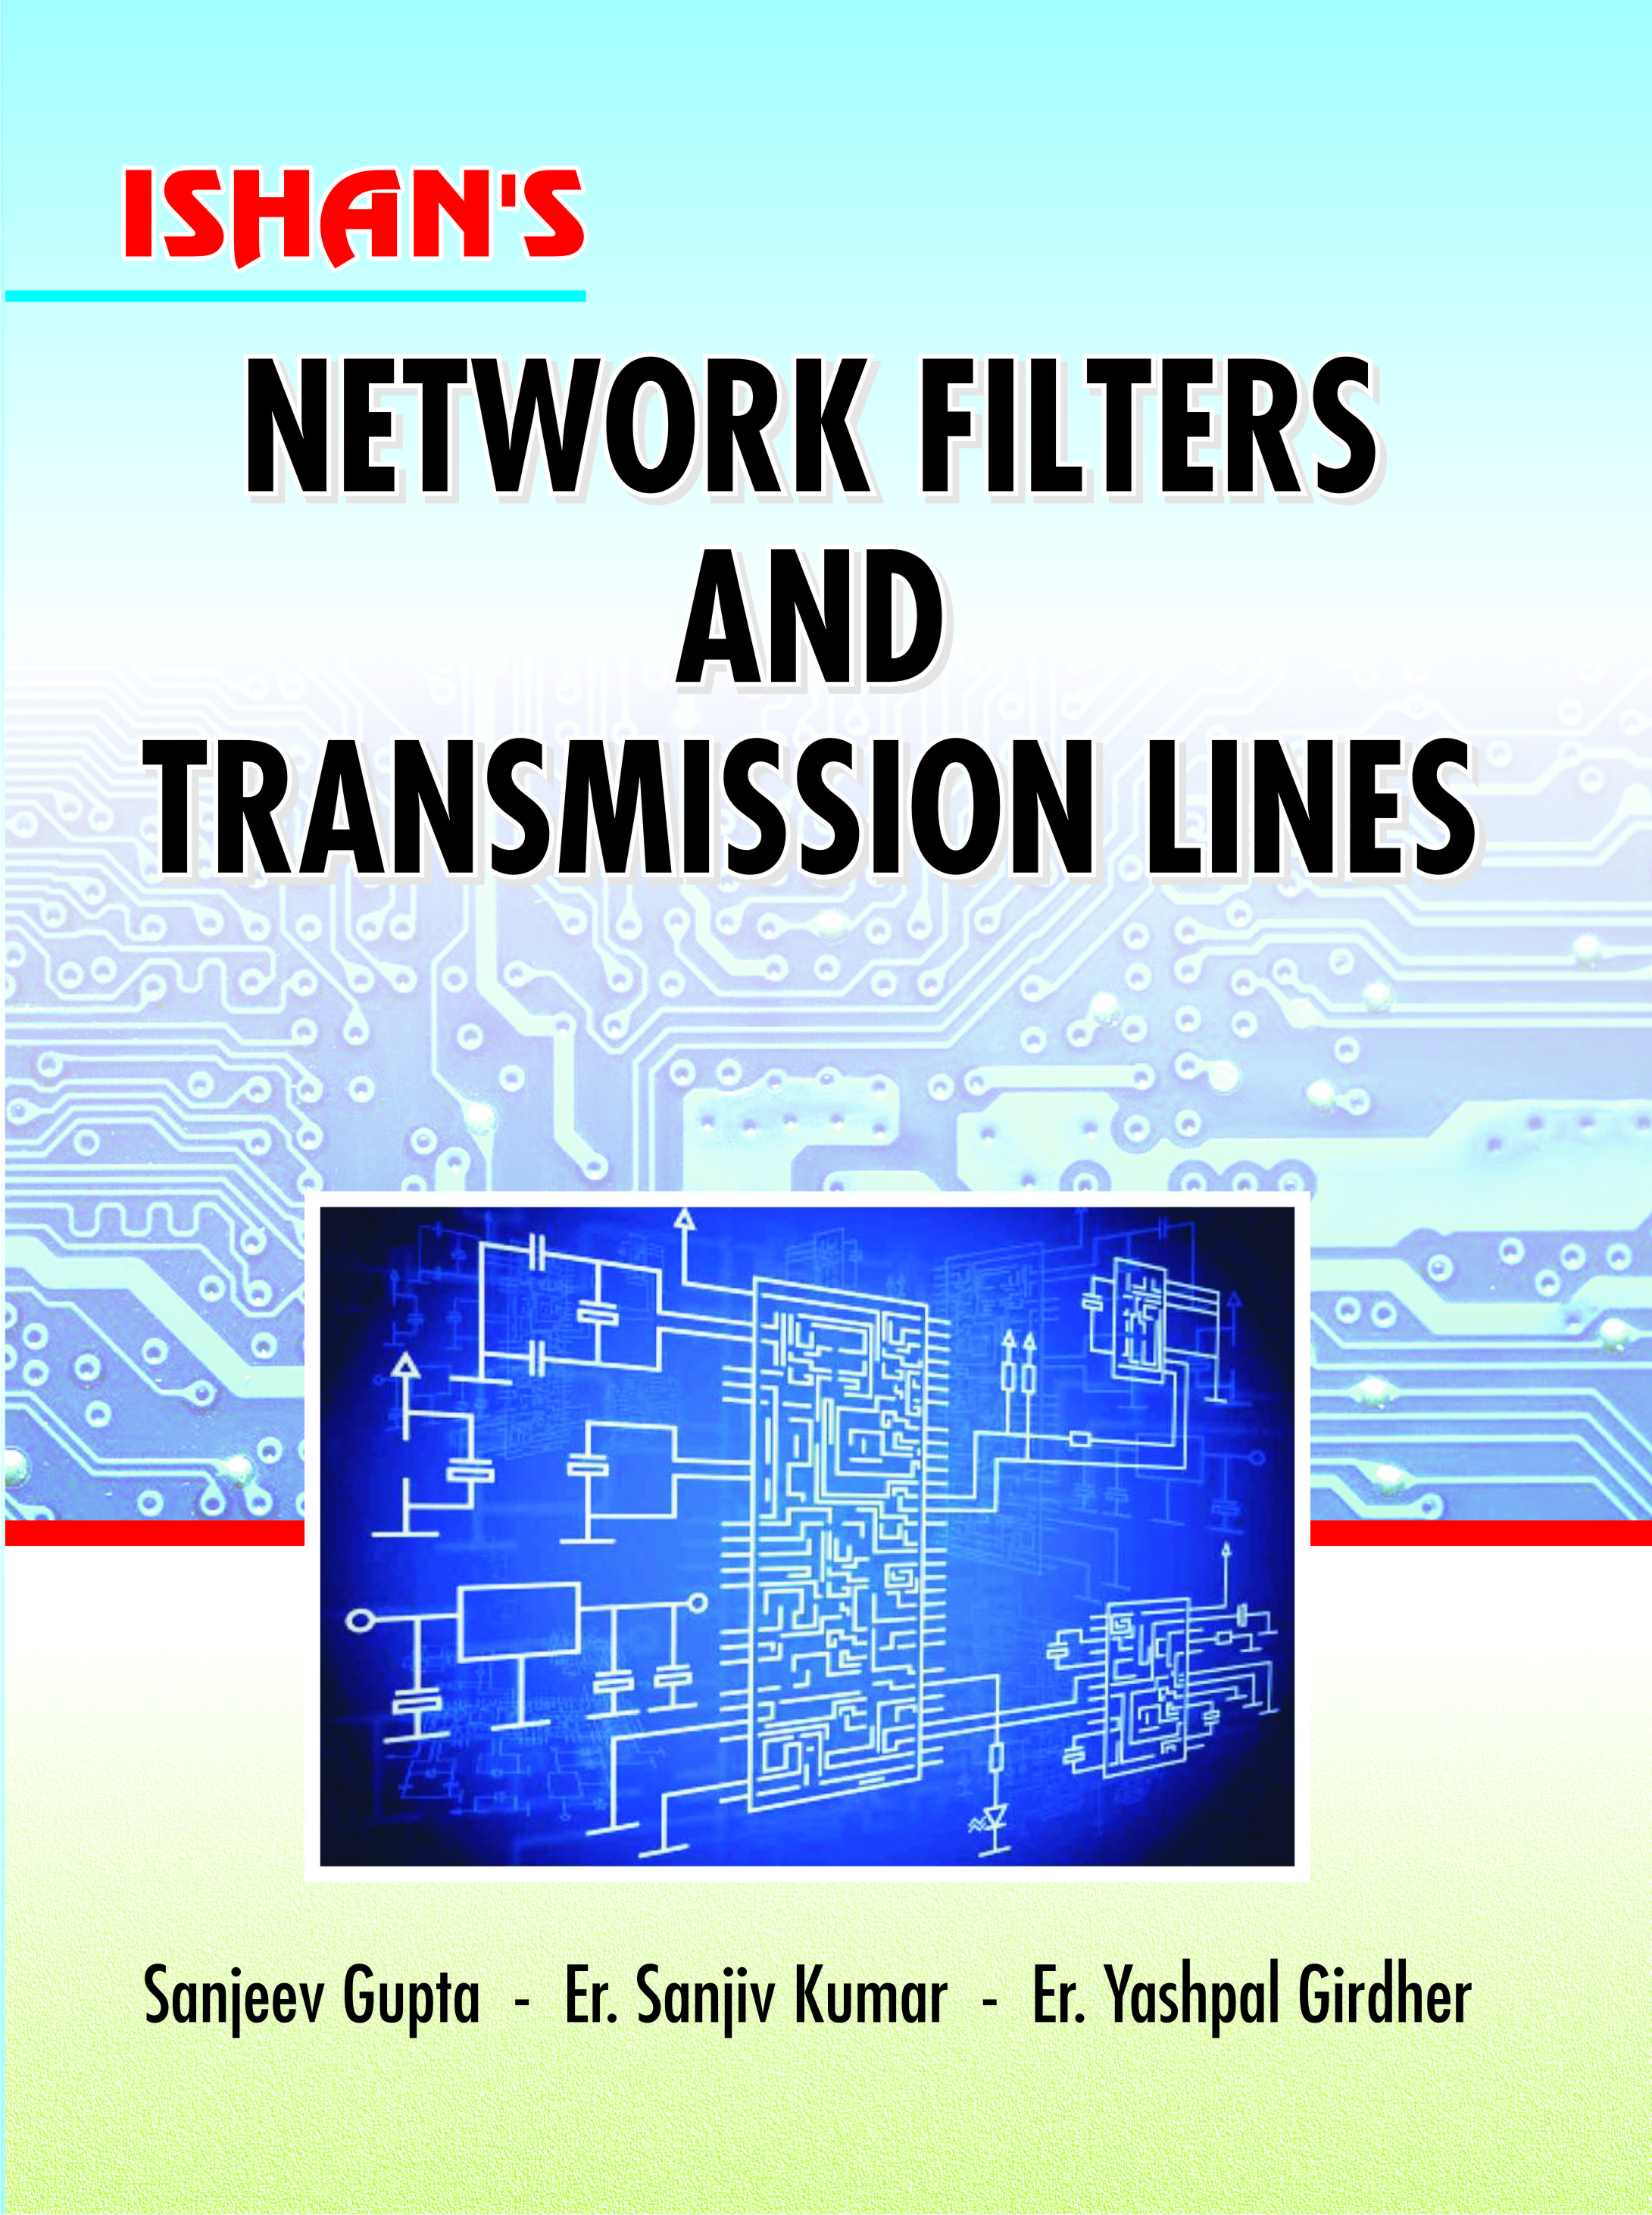 Network Filters & Transmission Lines